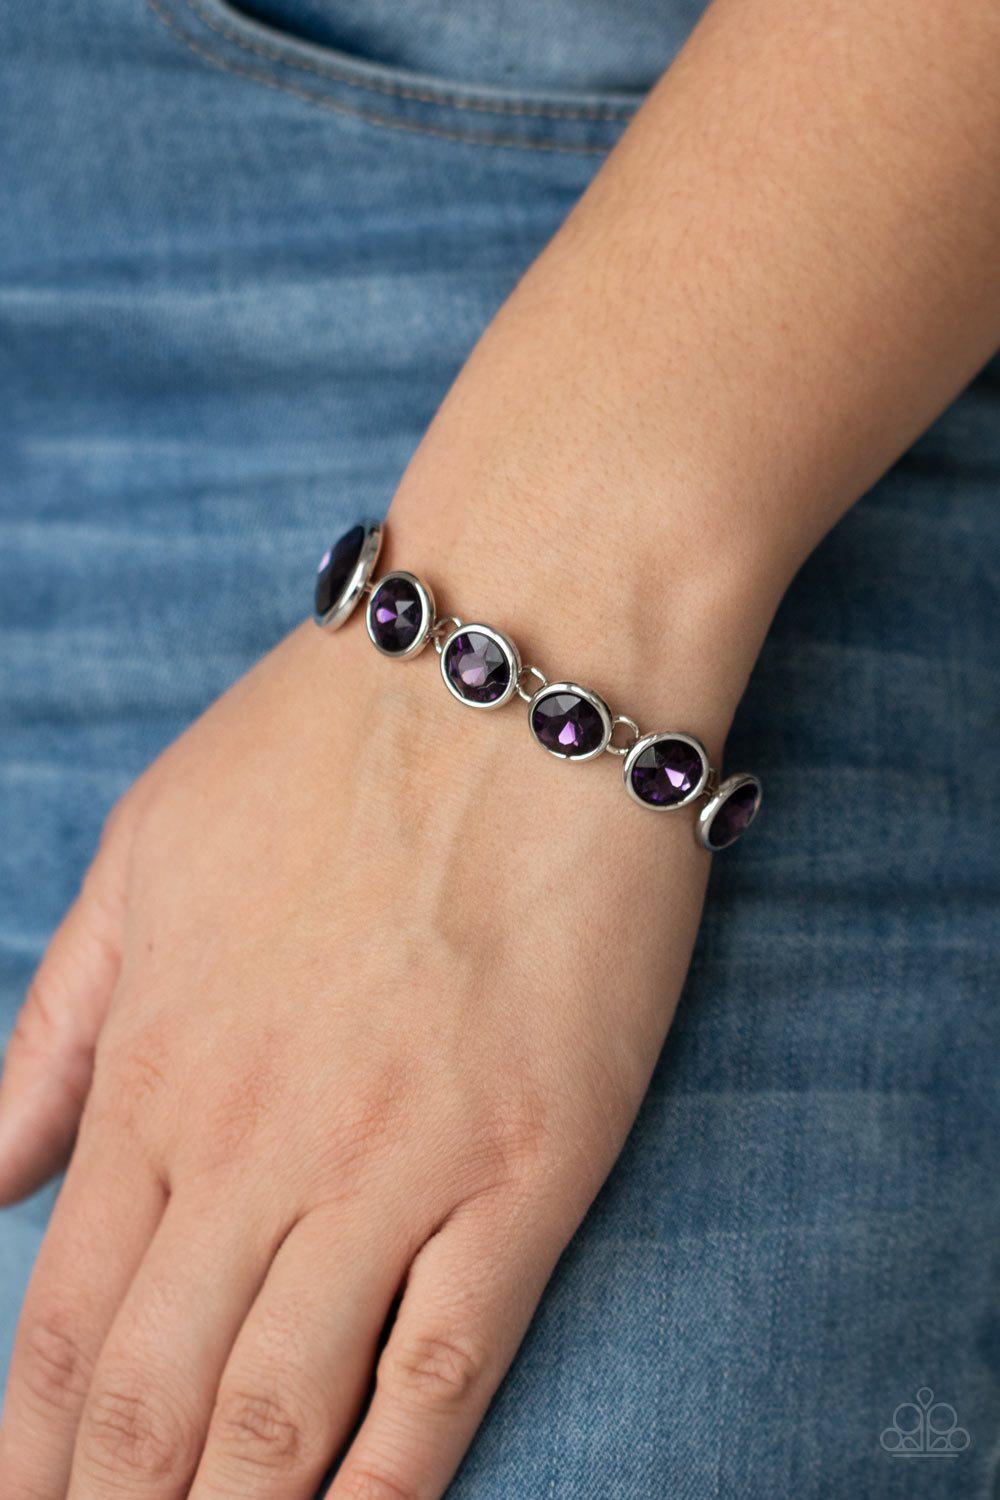 Lustrous Luminosity Purple Rhinestone Bracelet - Paparazzi Accessories- lightbox - CarasShop.com - $5 Jewelry by Cara Jewels